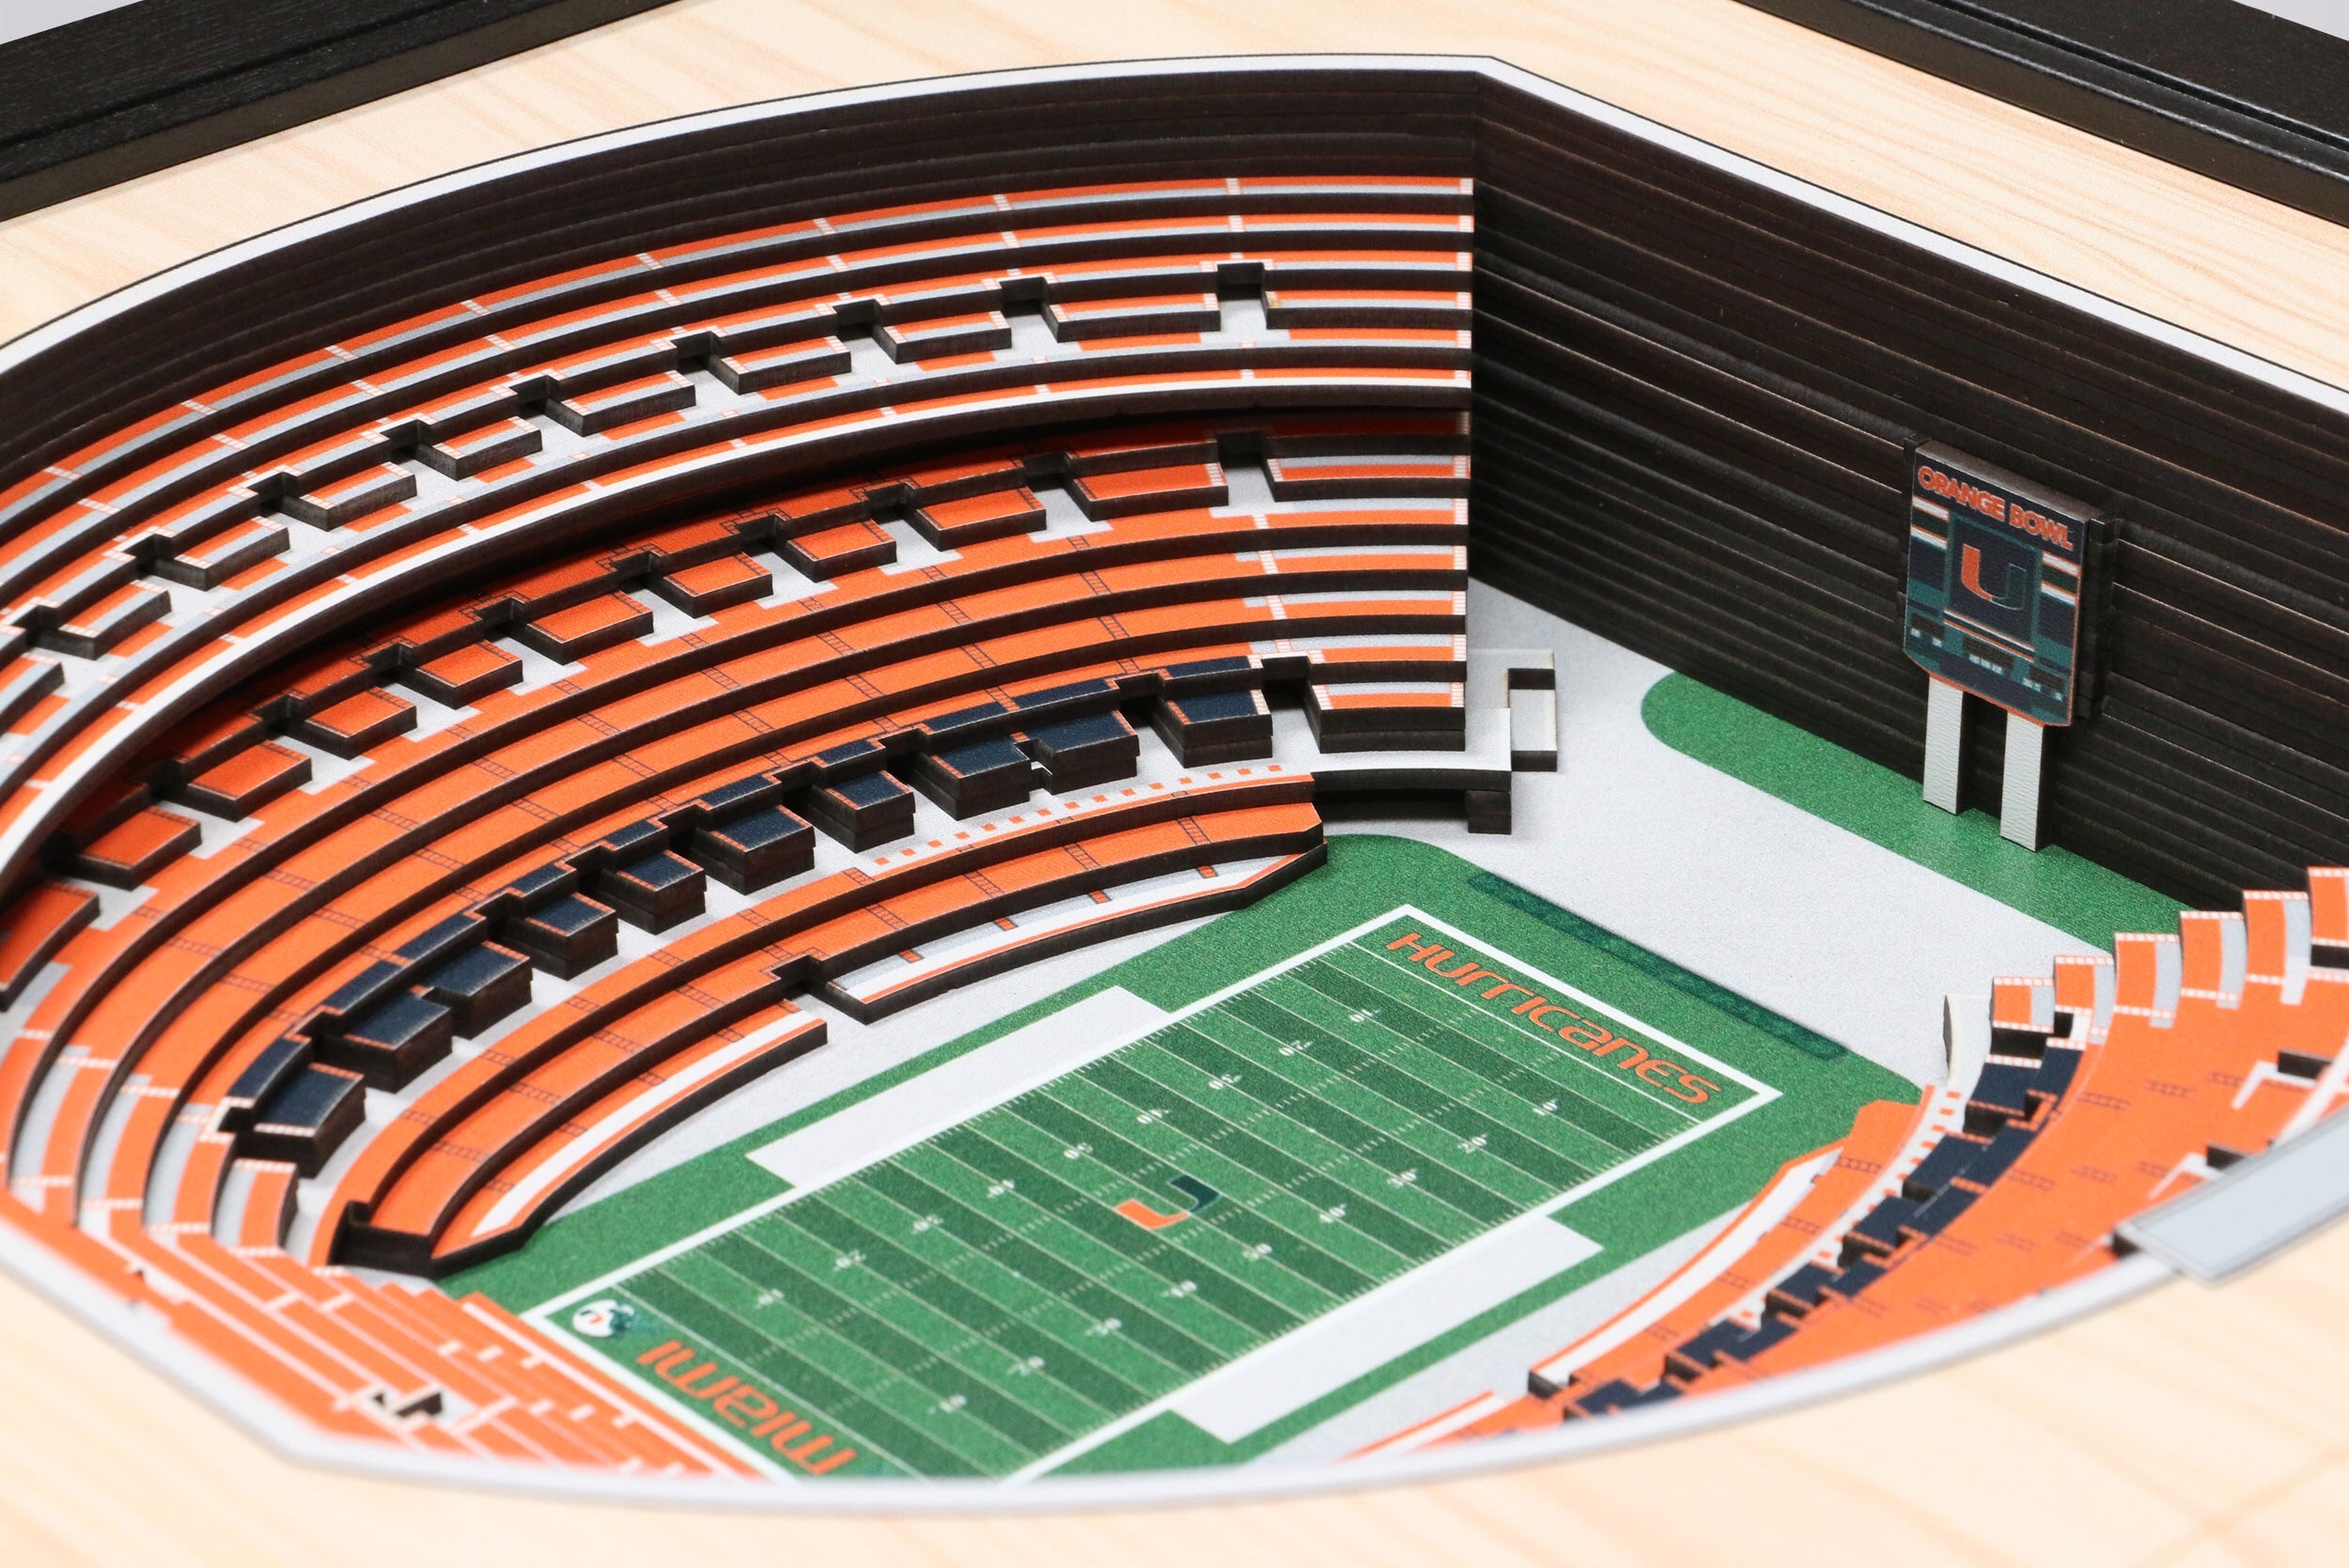 Miami Hurricanes Orange Bowl 25-Layer StadiumView 3D Wall Art